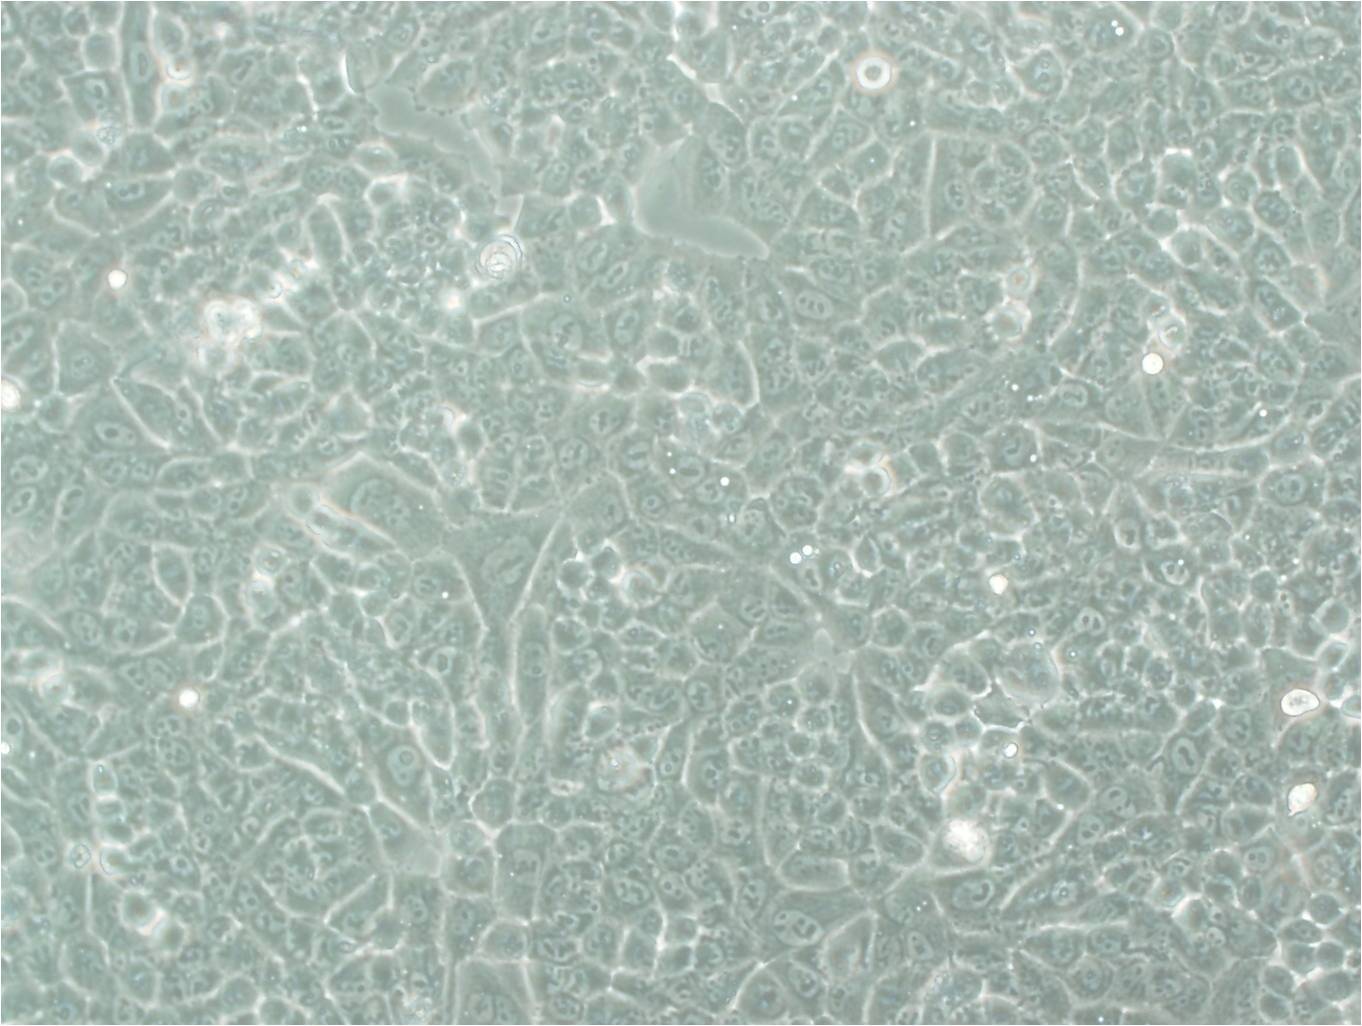 HuTu 80 Cells|人十二指肠腺癌克隆细胞(包送STR鉴定报告),HuTu 80 Cells